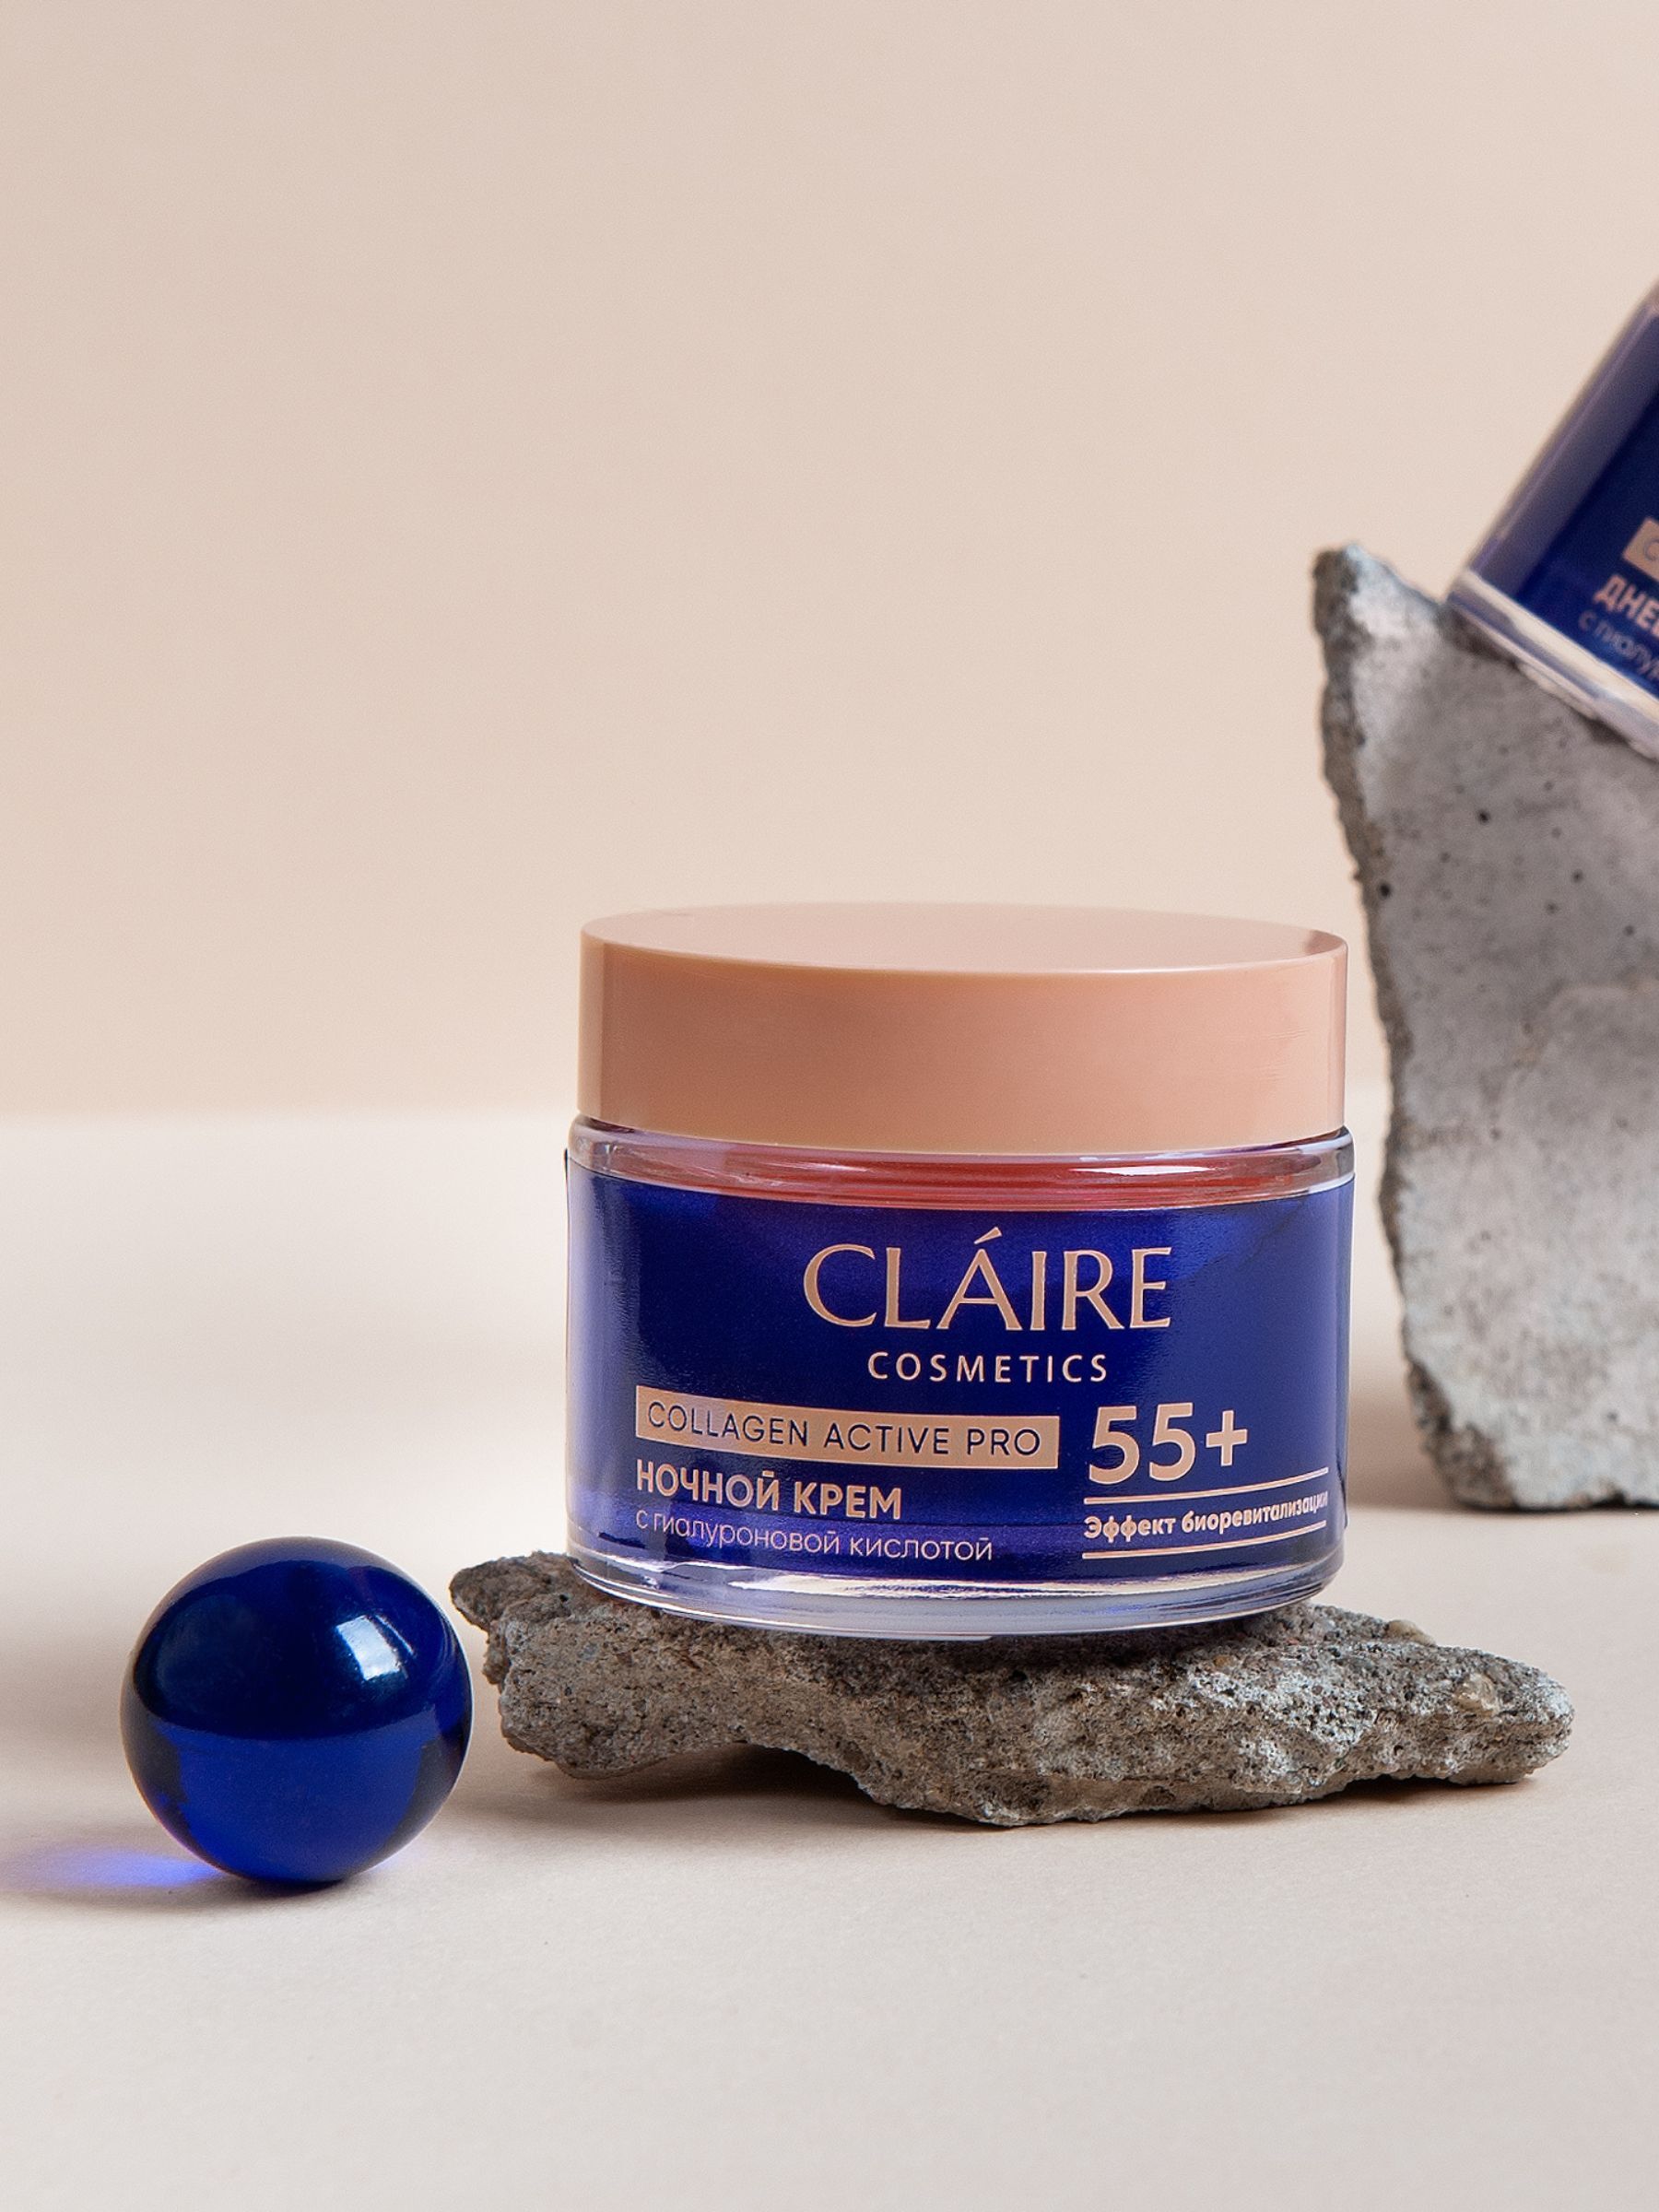 Claire Cosmetics Collagen Active Pro. Claire Collagen Active Pro 35+ крем ночной 50мл. Коллаген в косметике. Бренд Claire Cosmetics. Коллаген актив отзывы